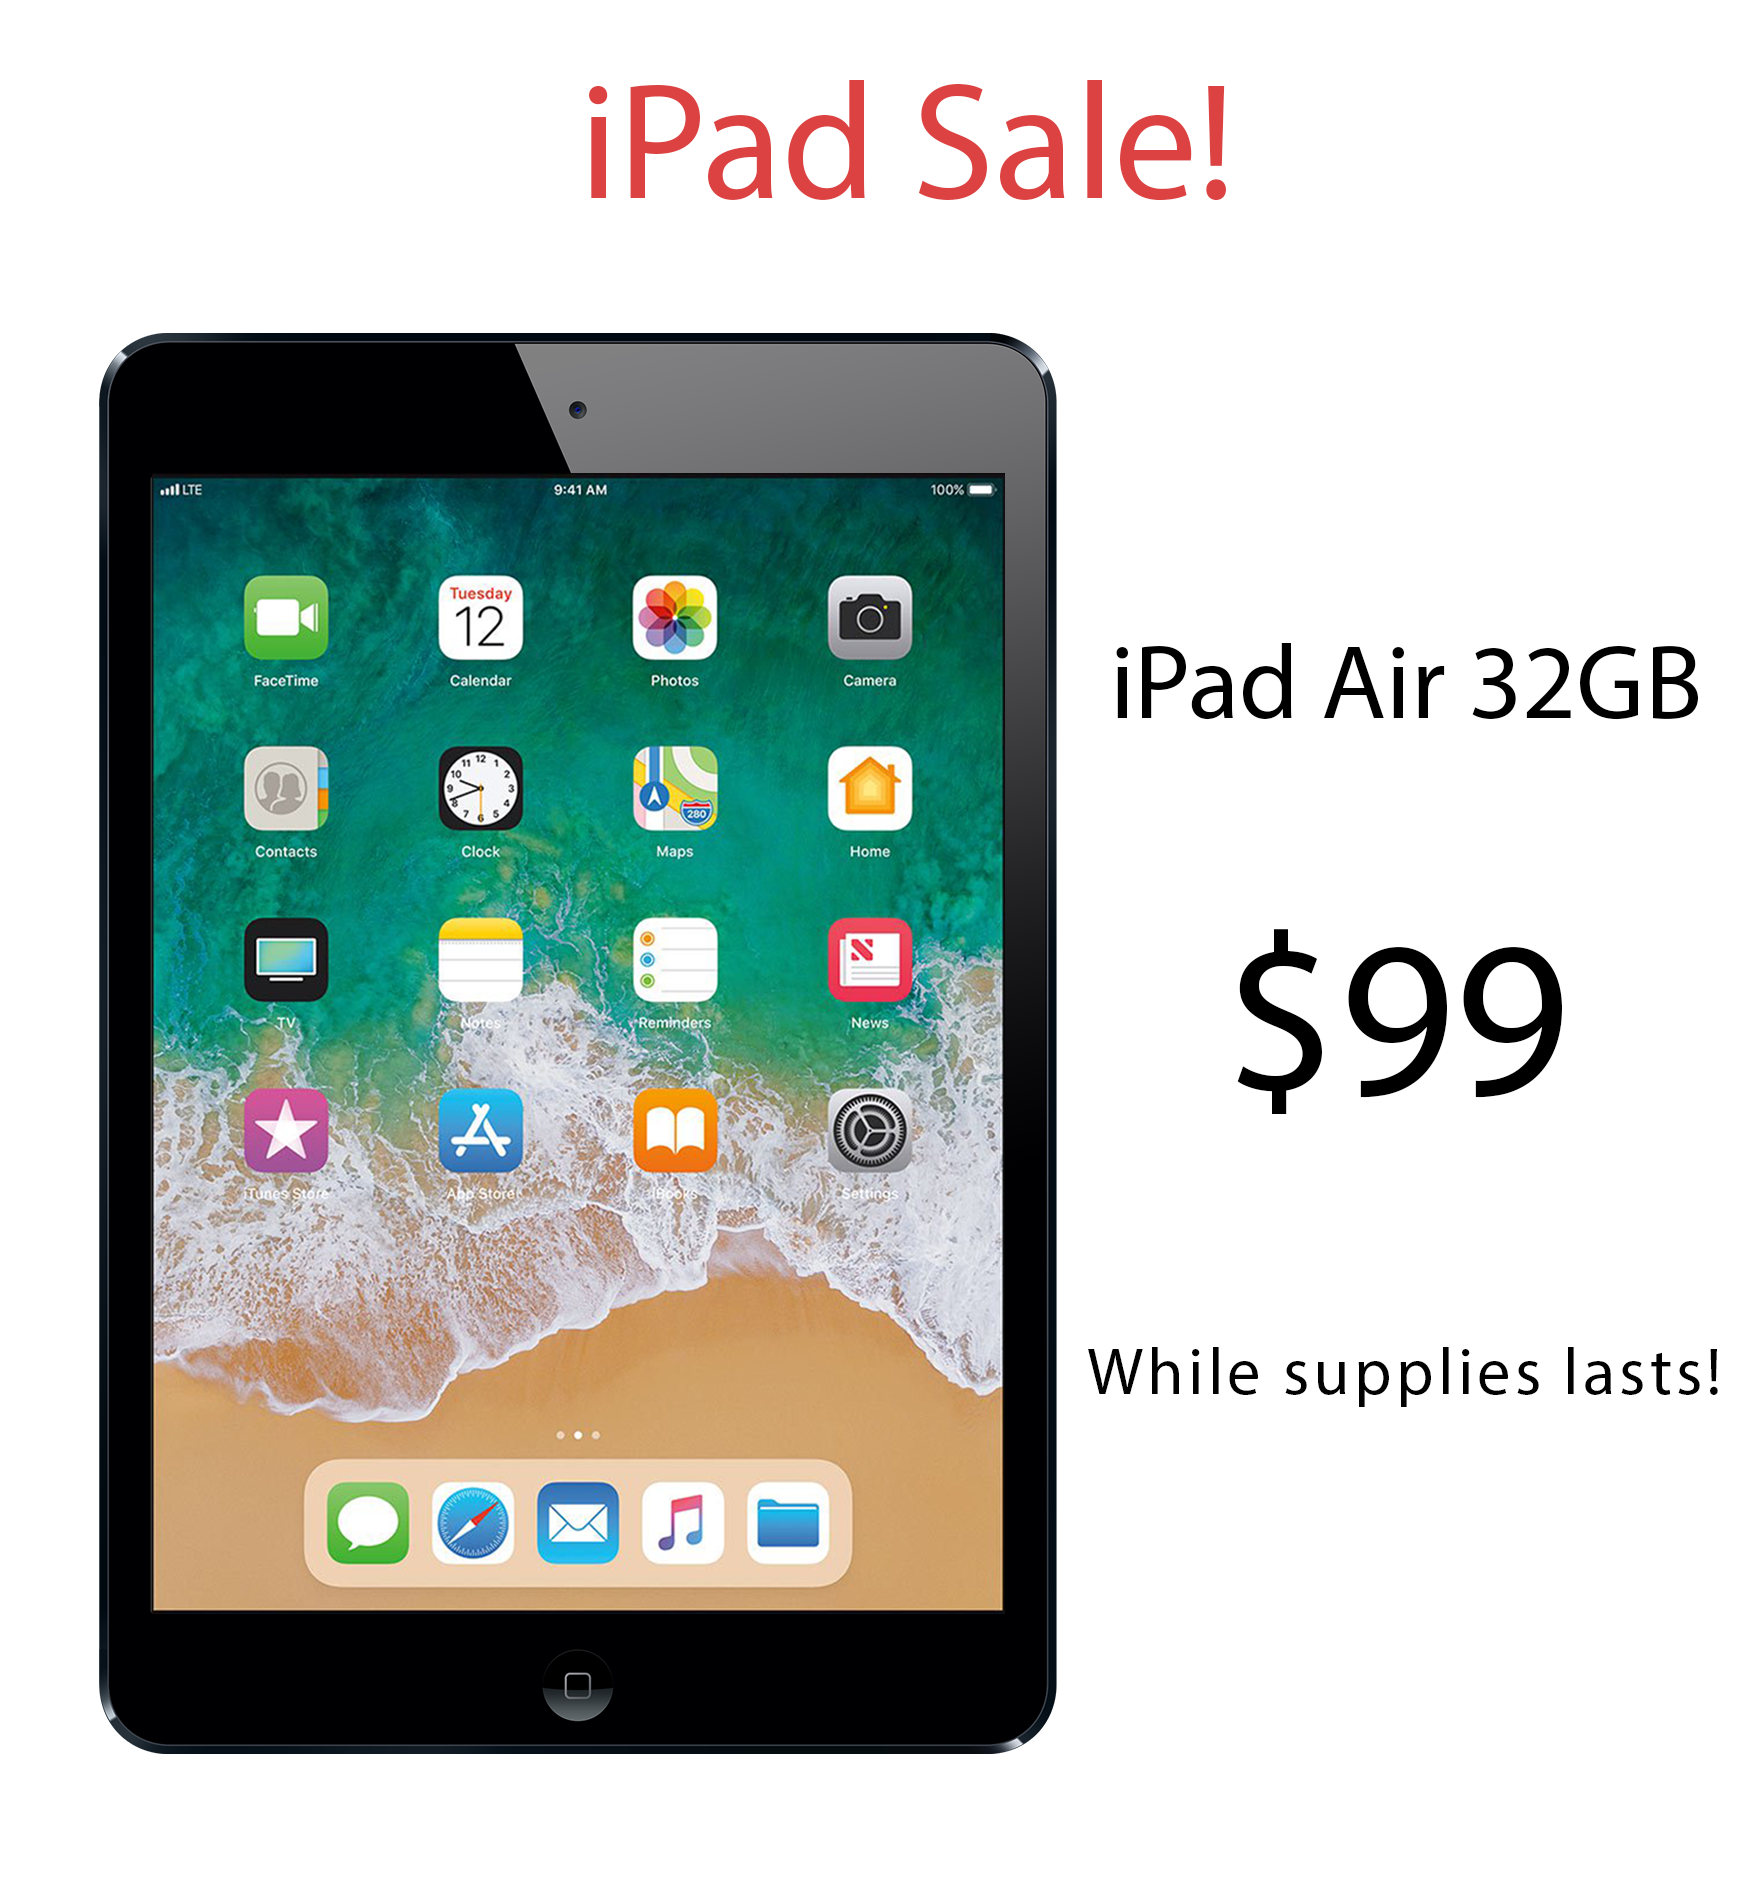 iPad Sale! iPad Air Sale for $99!